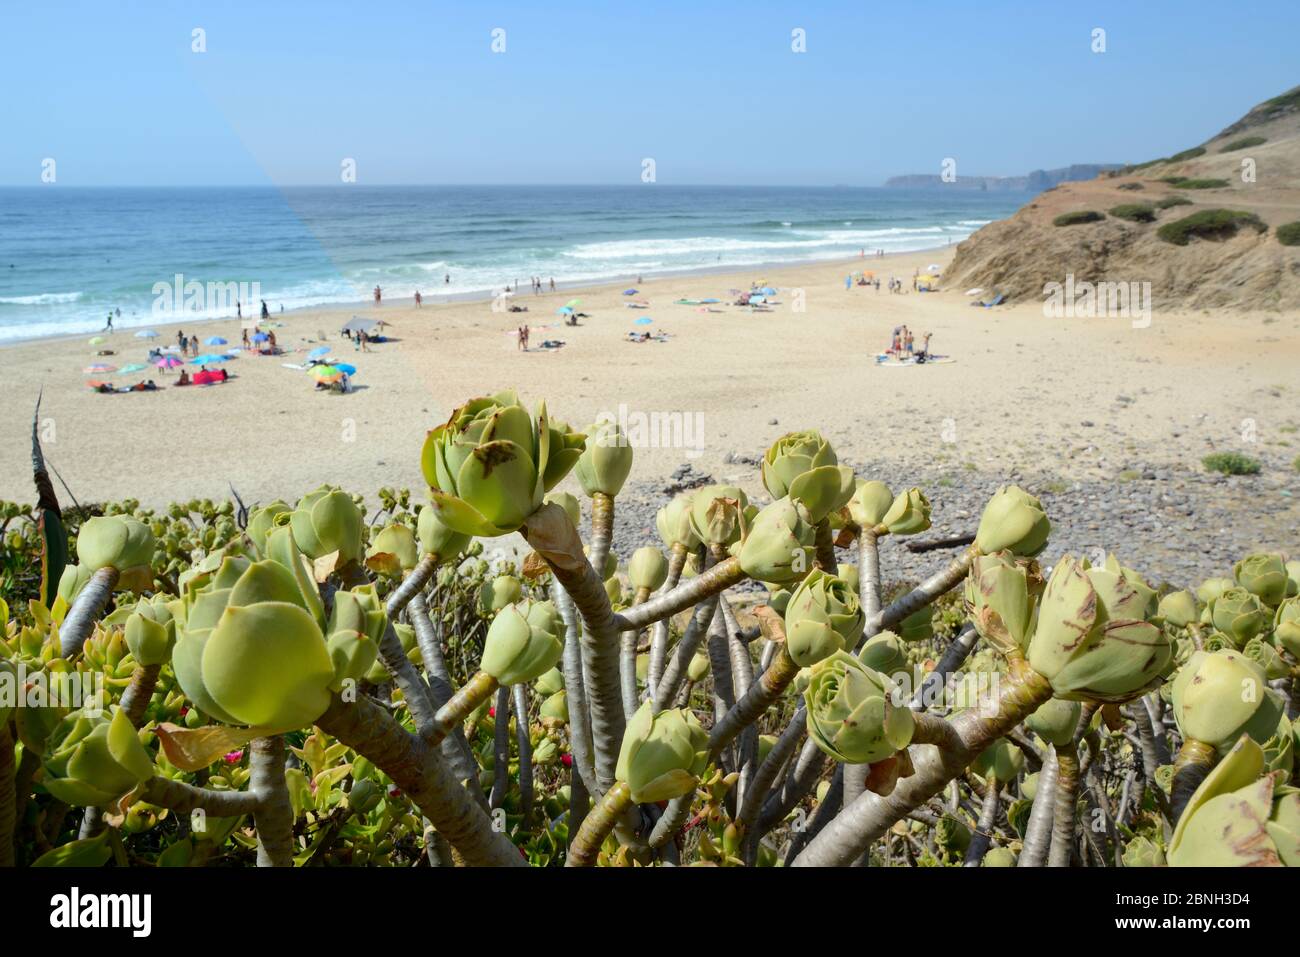 Tree Aeonium / Tree houseleek (Aeonium arboreum), an introduced species from the Canaries growing on a coastal headland overlooking a beach, Praia de Stock Photo